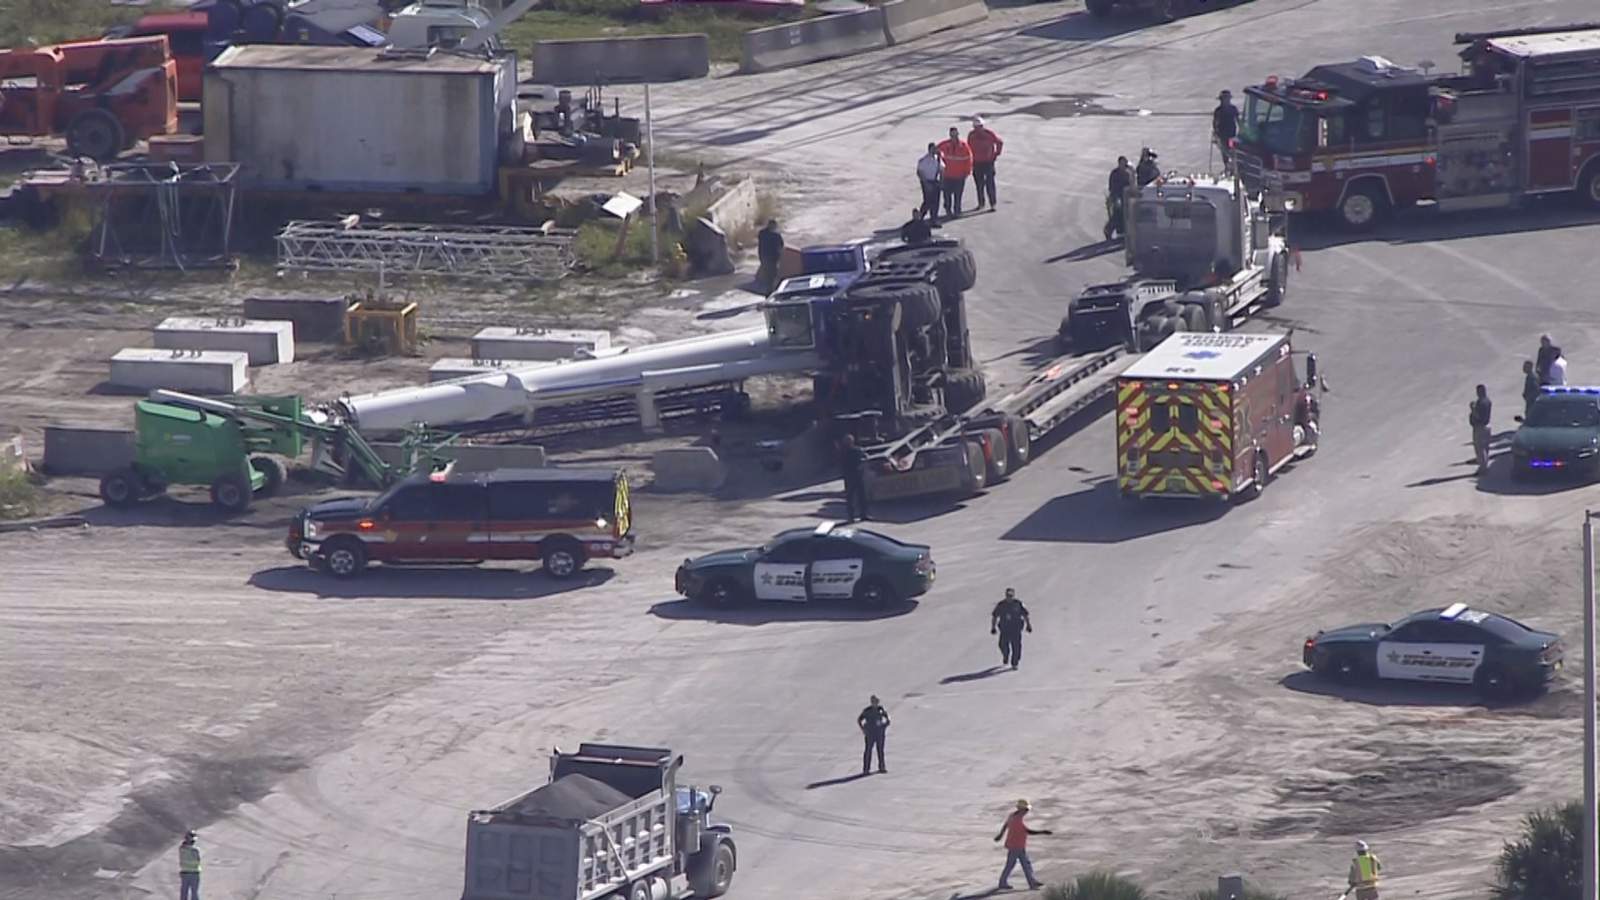 1 injured in crane collapse at Port Everglades